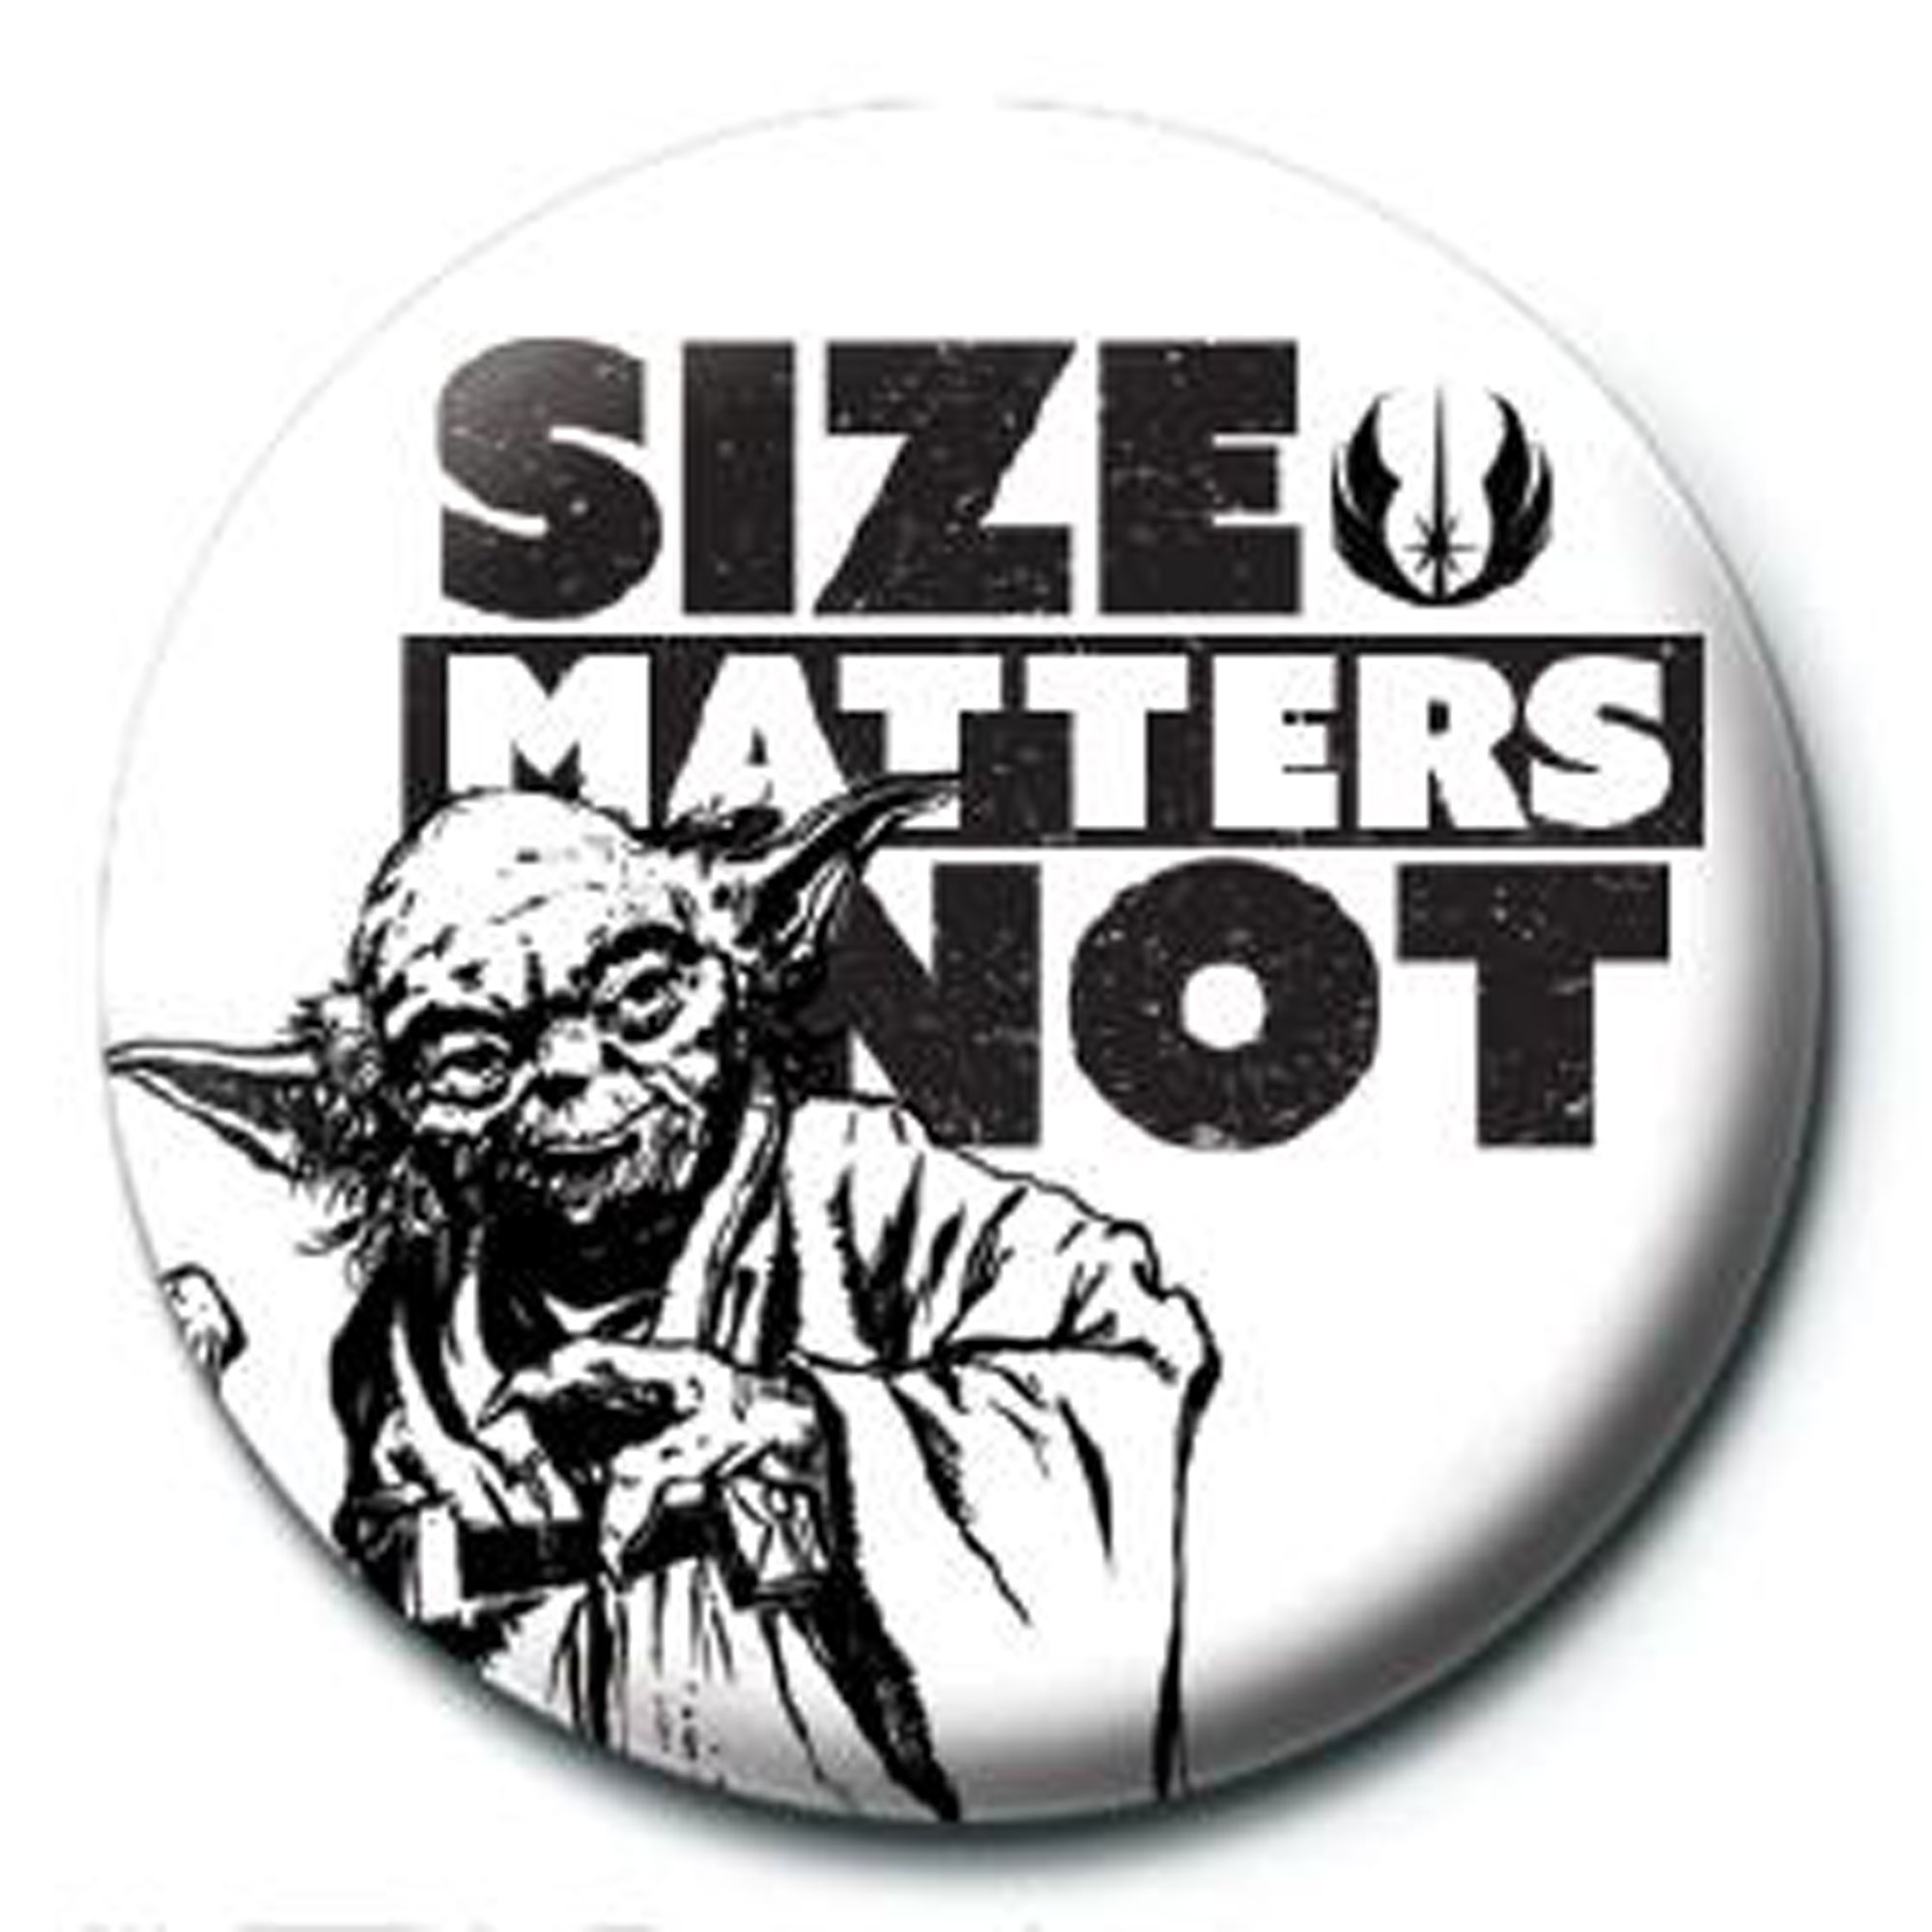 Star Wars - Size Matters Not